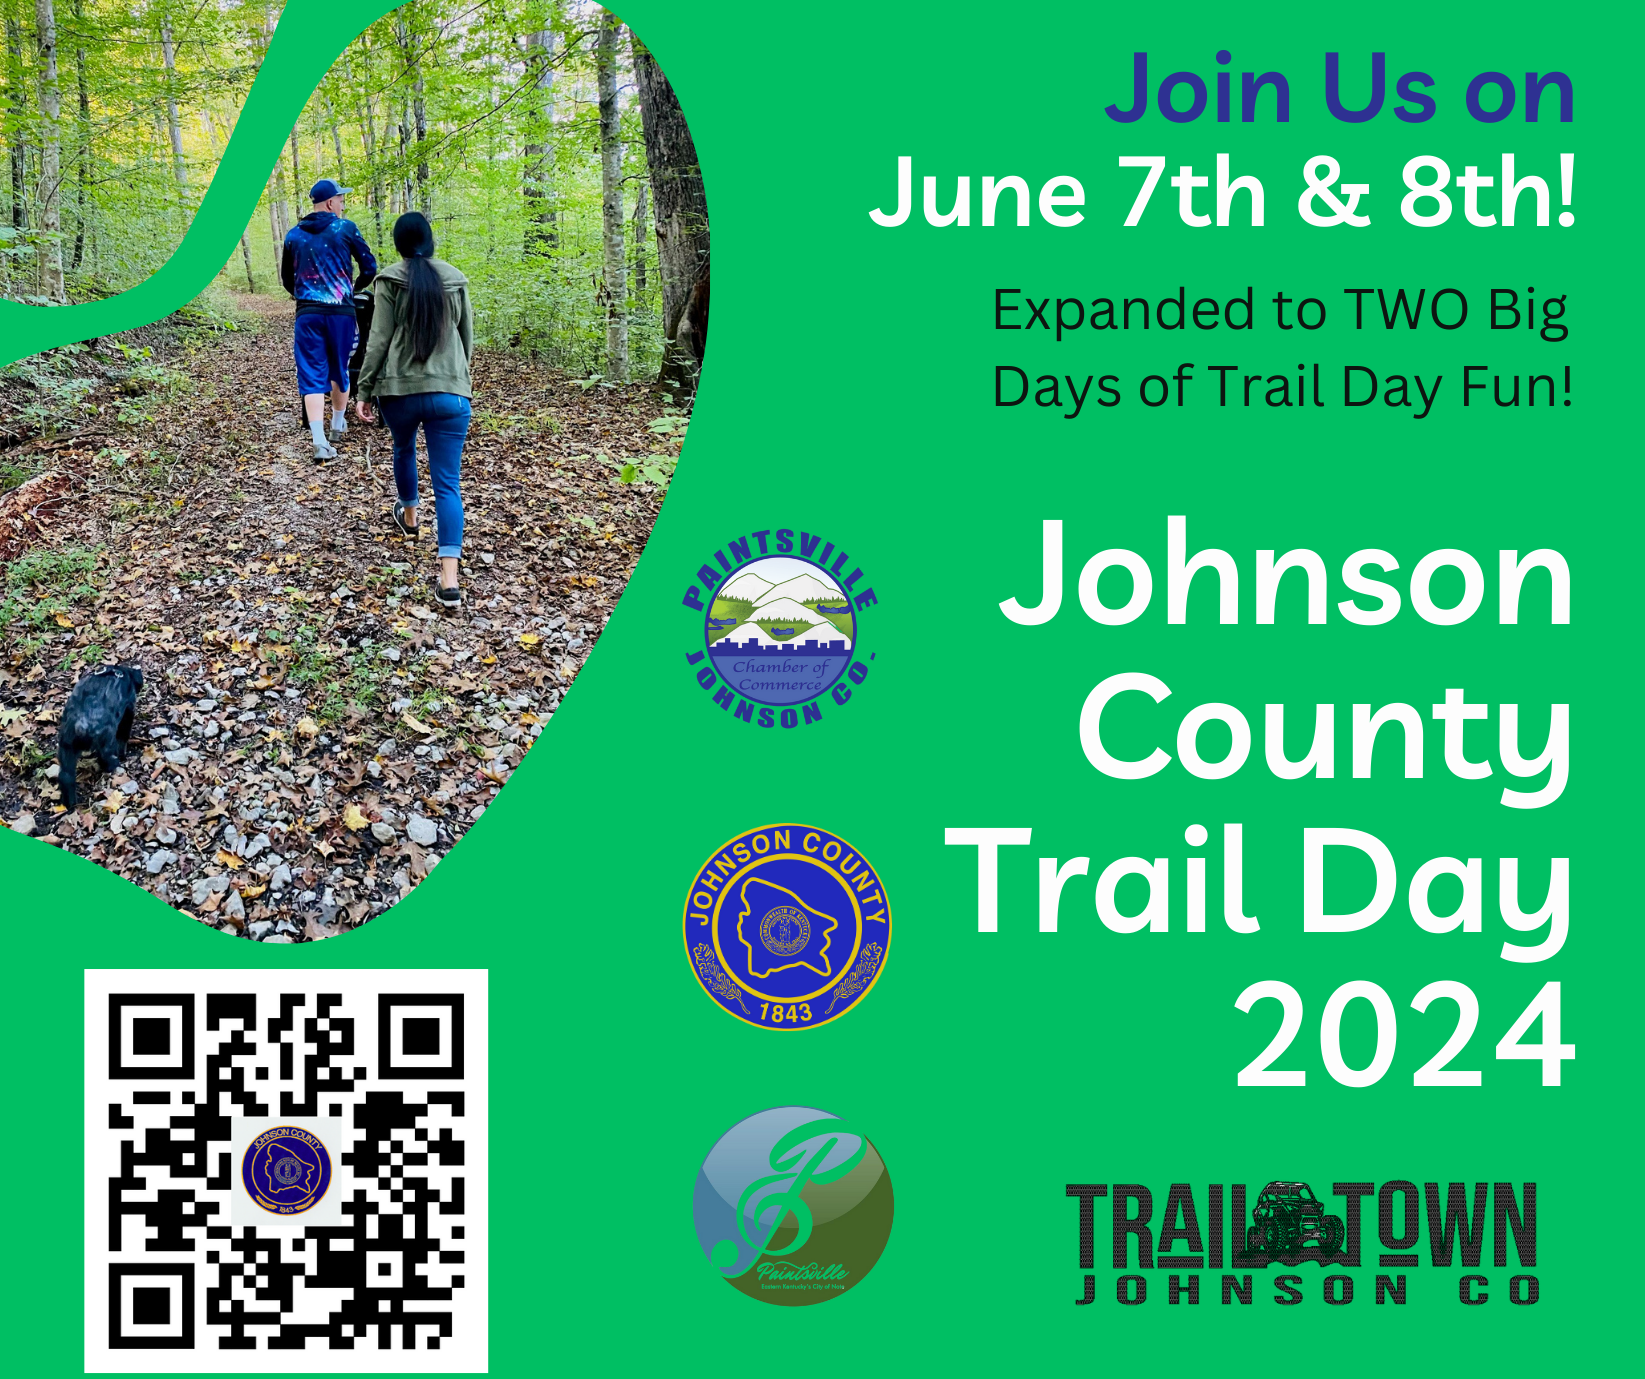 Johnson County Trail Days